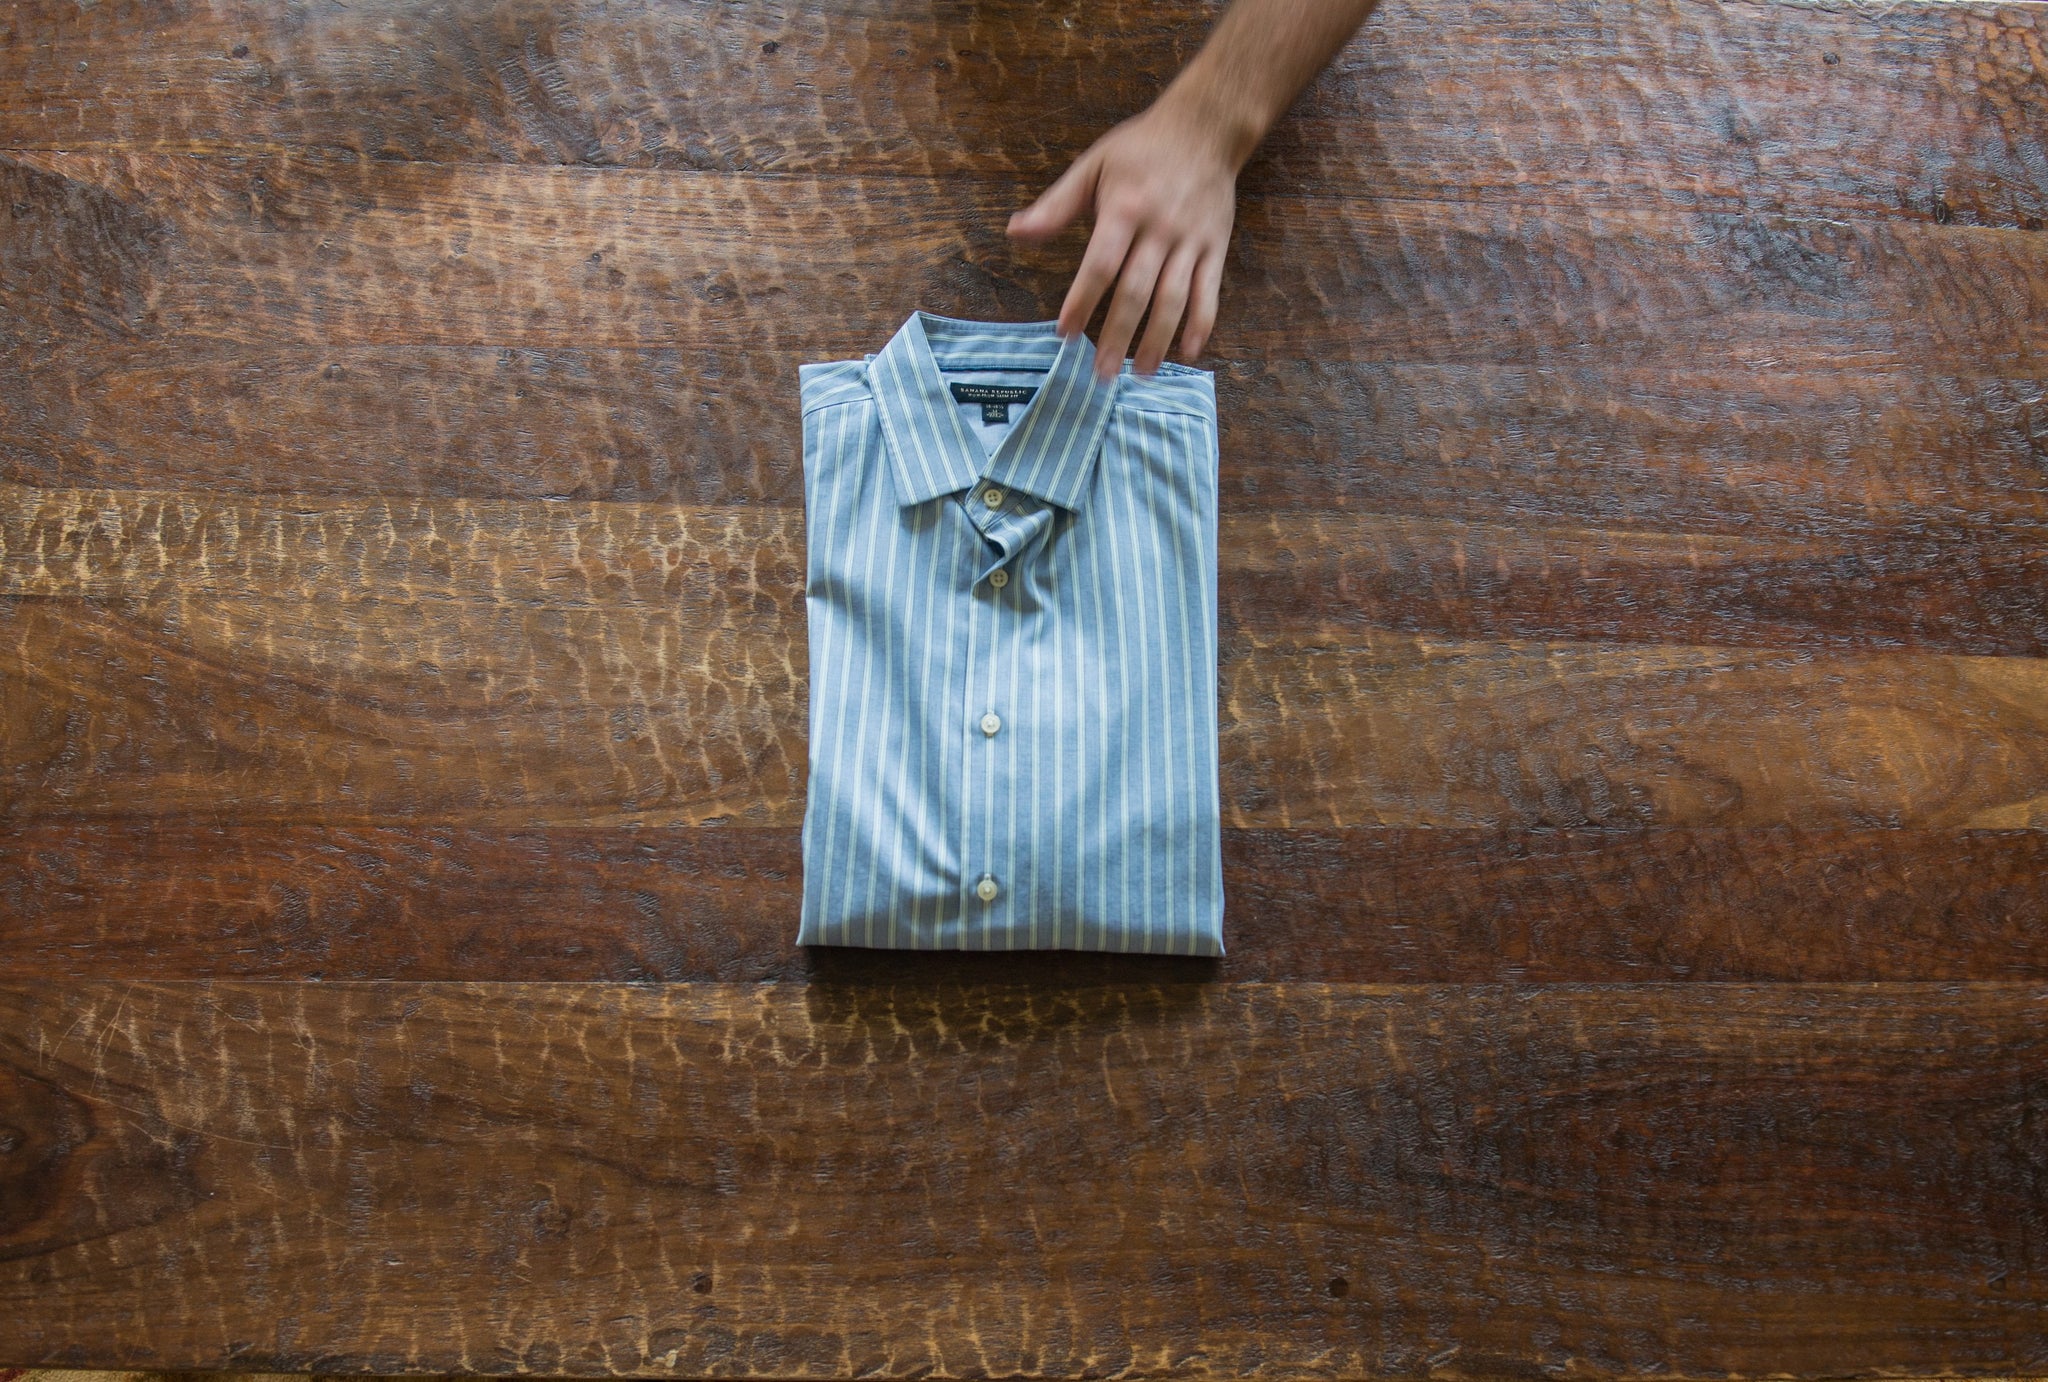 Perfectly folded dress shirt using EzPacking travel folding board